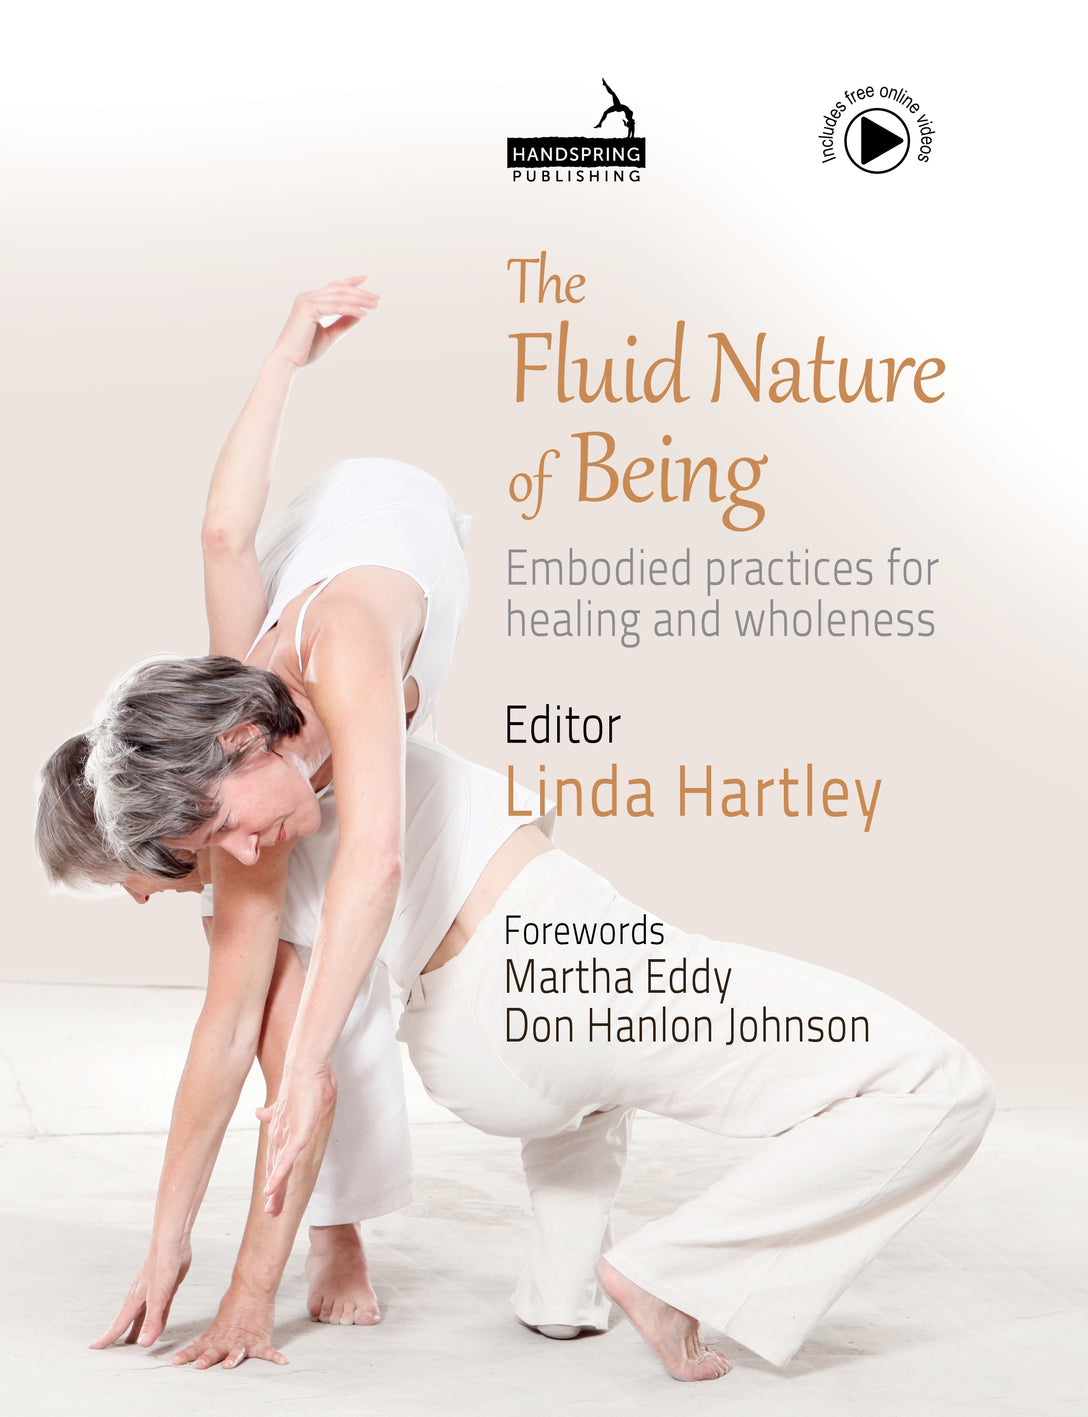 The Fluid Nature of Being by Martha Eddy, Linda Hartley, Don Hanlon Johnson